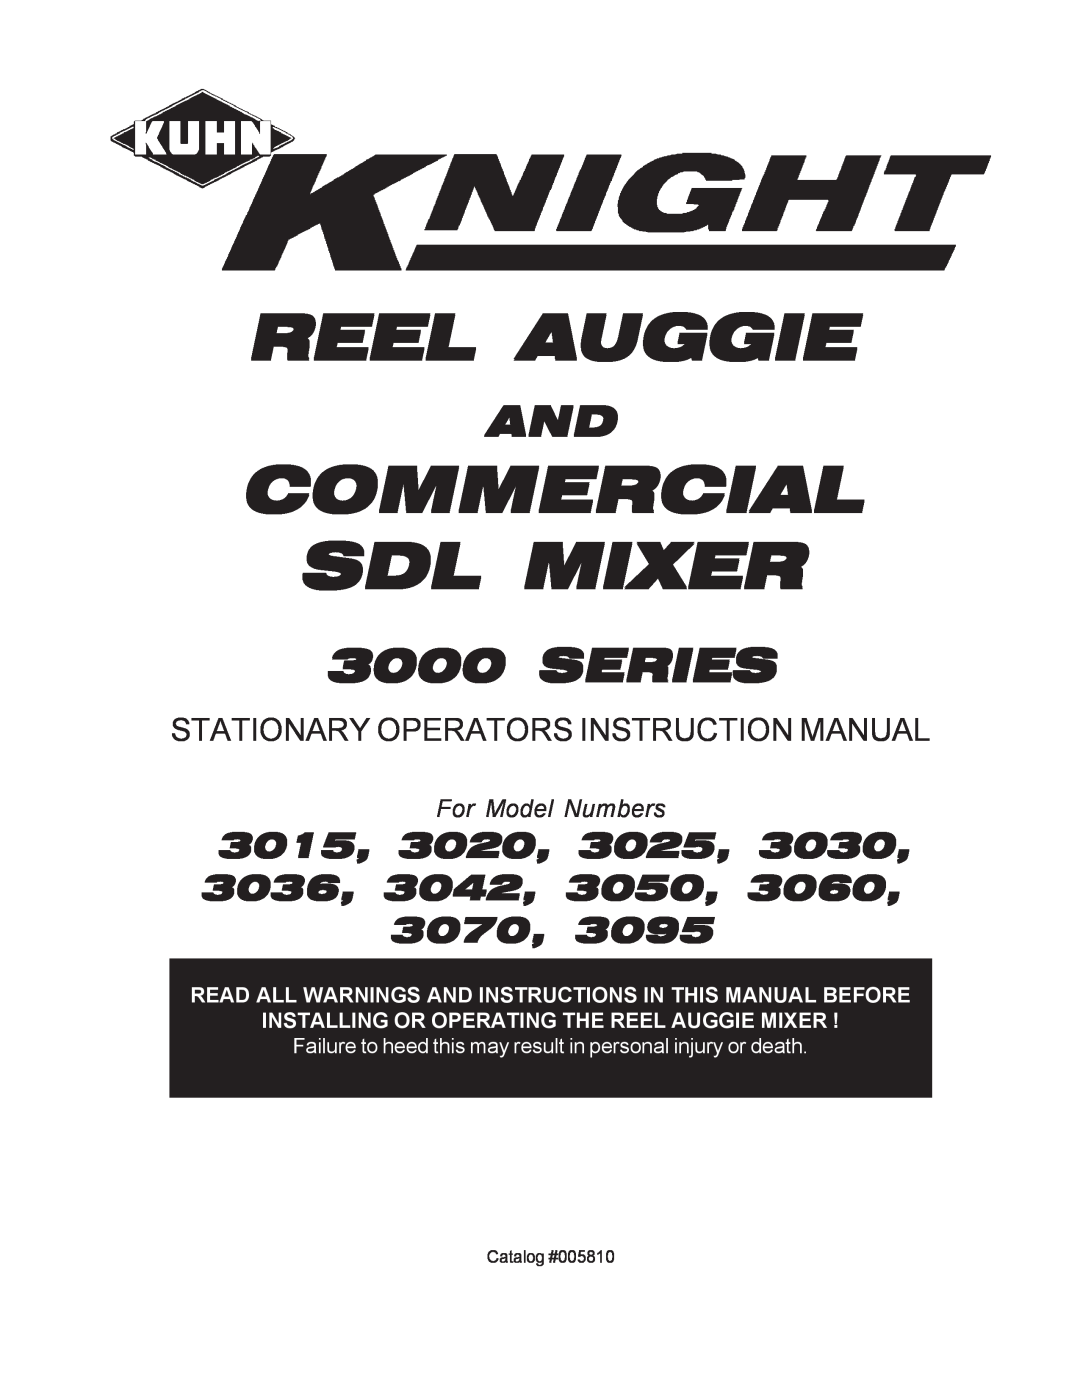 Kuhn Rikon 3036 instruction manual Reel Auggie, Commercial Sdl Mixer, Series, Stationary Operators Instruction Manual 